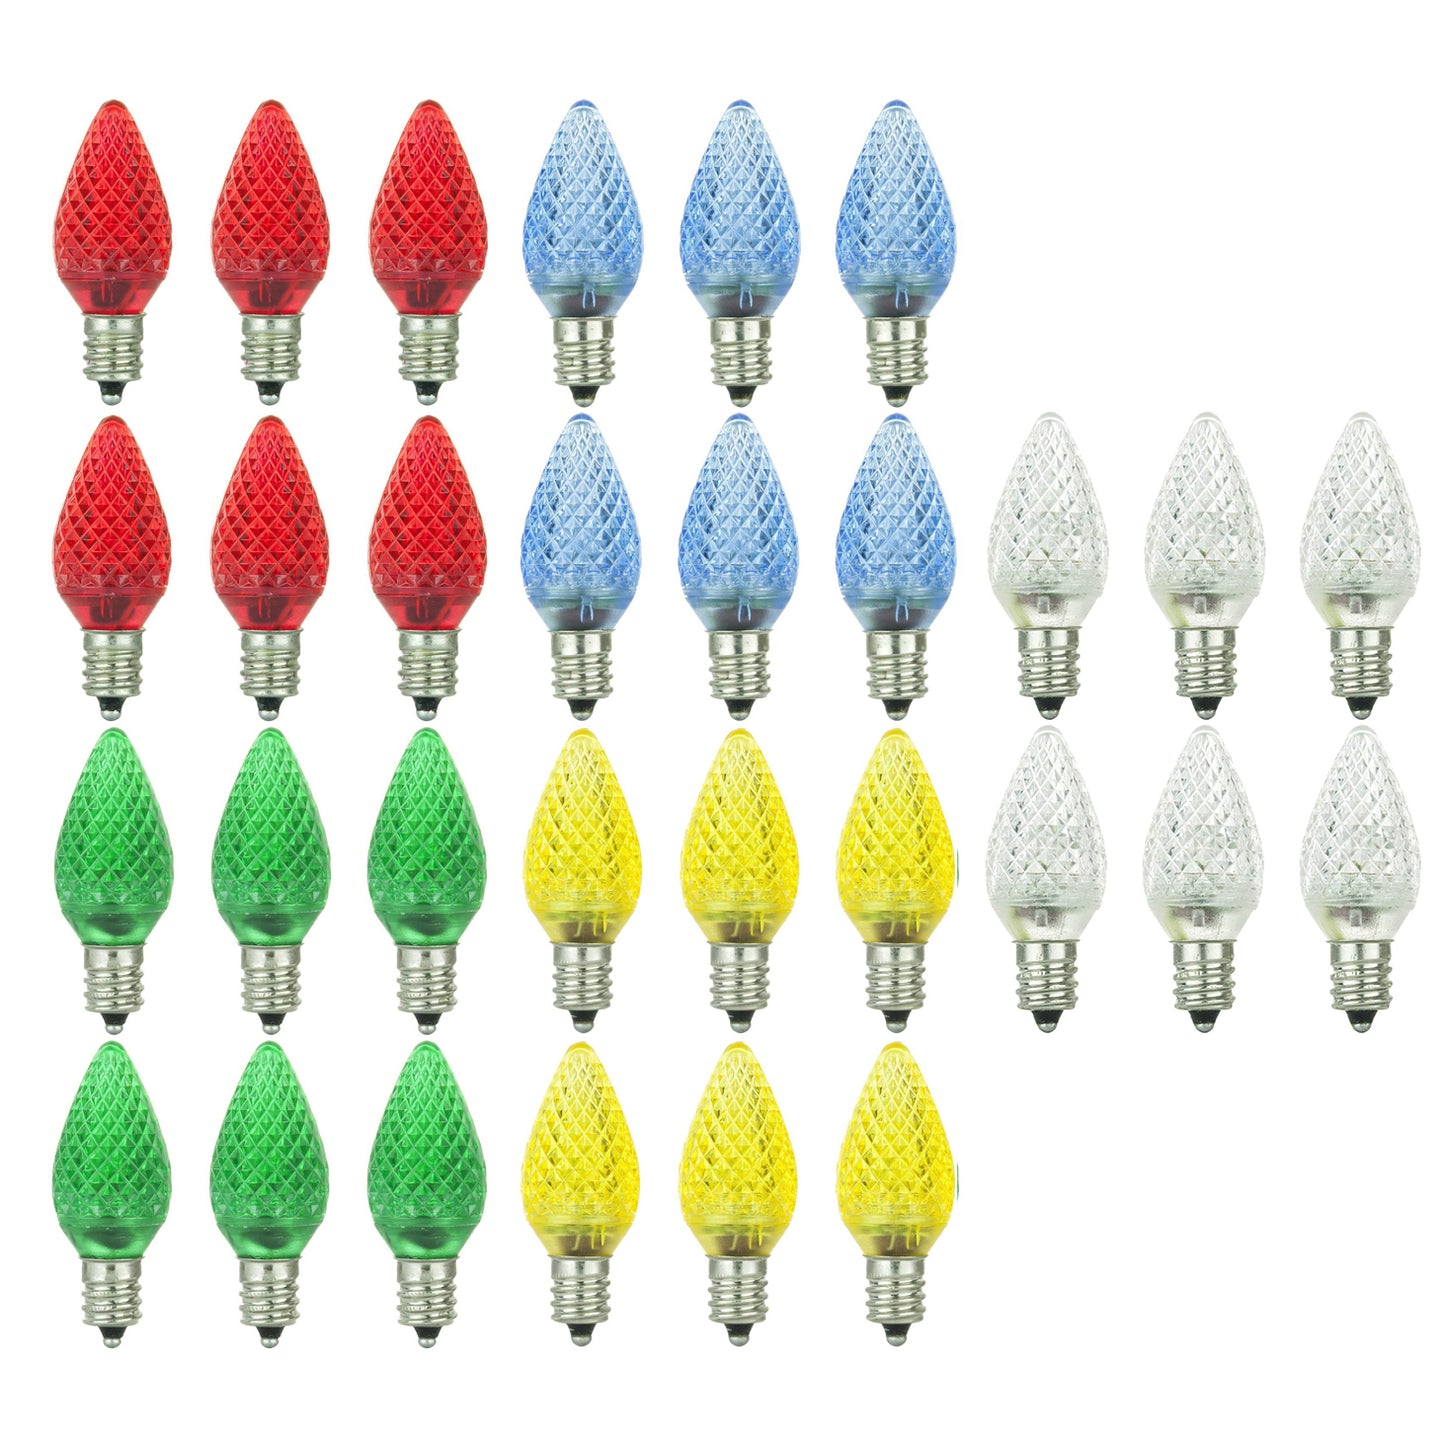 Sunlite 41295-SU Decorative Holiday Light Bulbs, Christmas Lighting, LED C7, E12 Candelabra Base, 0.4 Watt, Multi Colored, 30 Pack